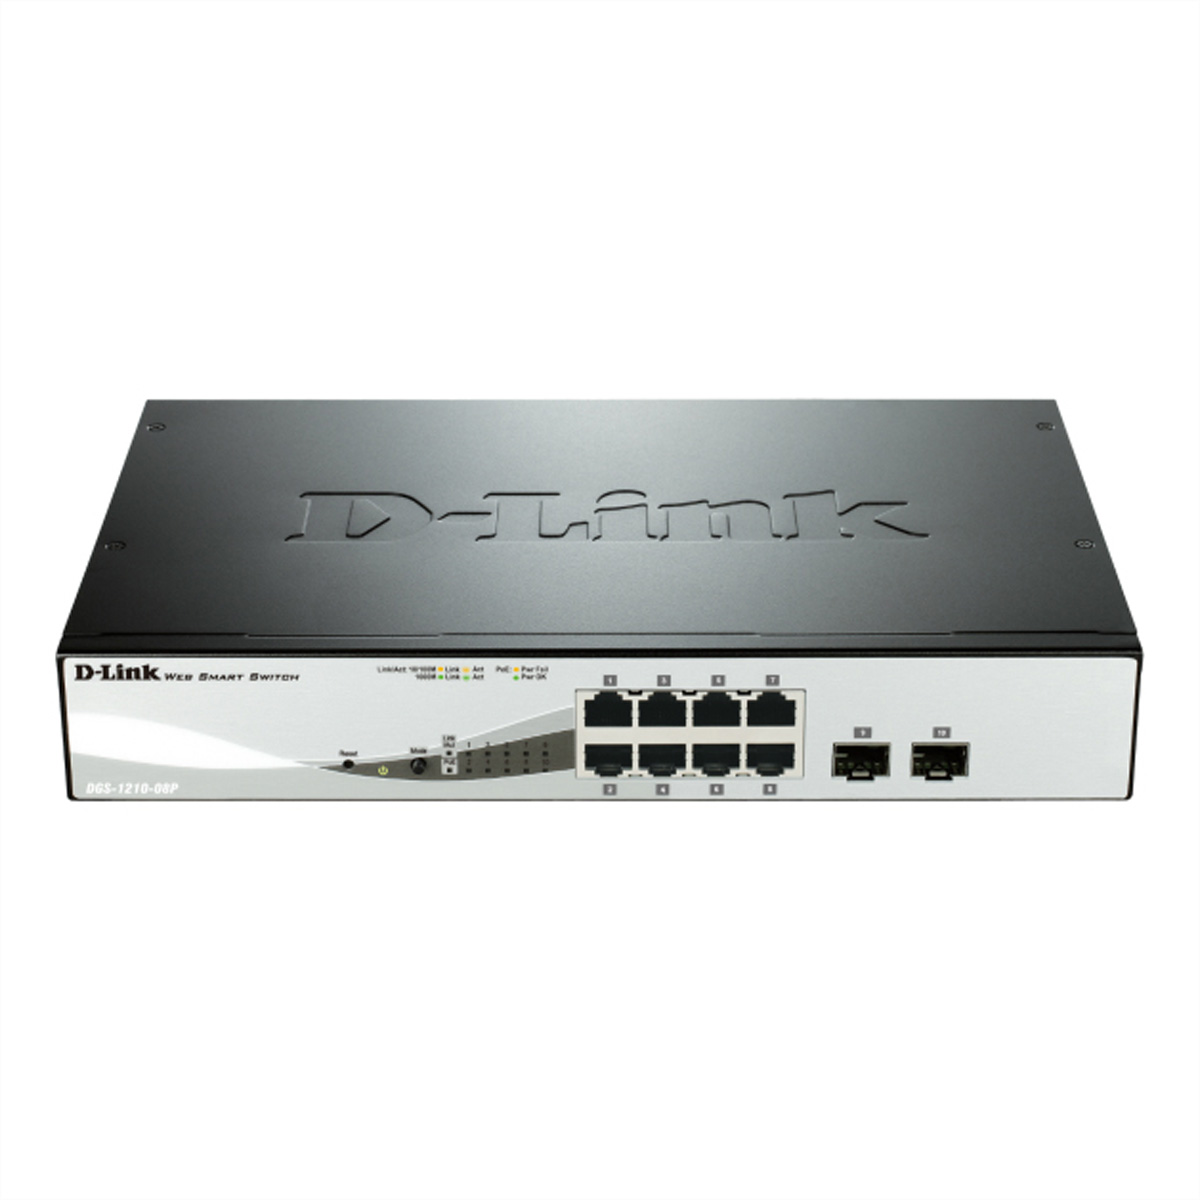 PoE D-LINK DGS-1210-08P 8-Port Ethernet Gigabit Gigabit Smart Web Switch Switch